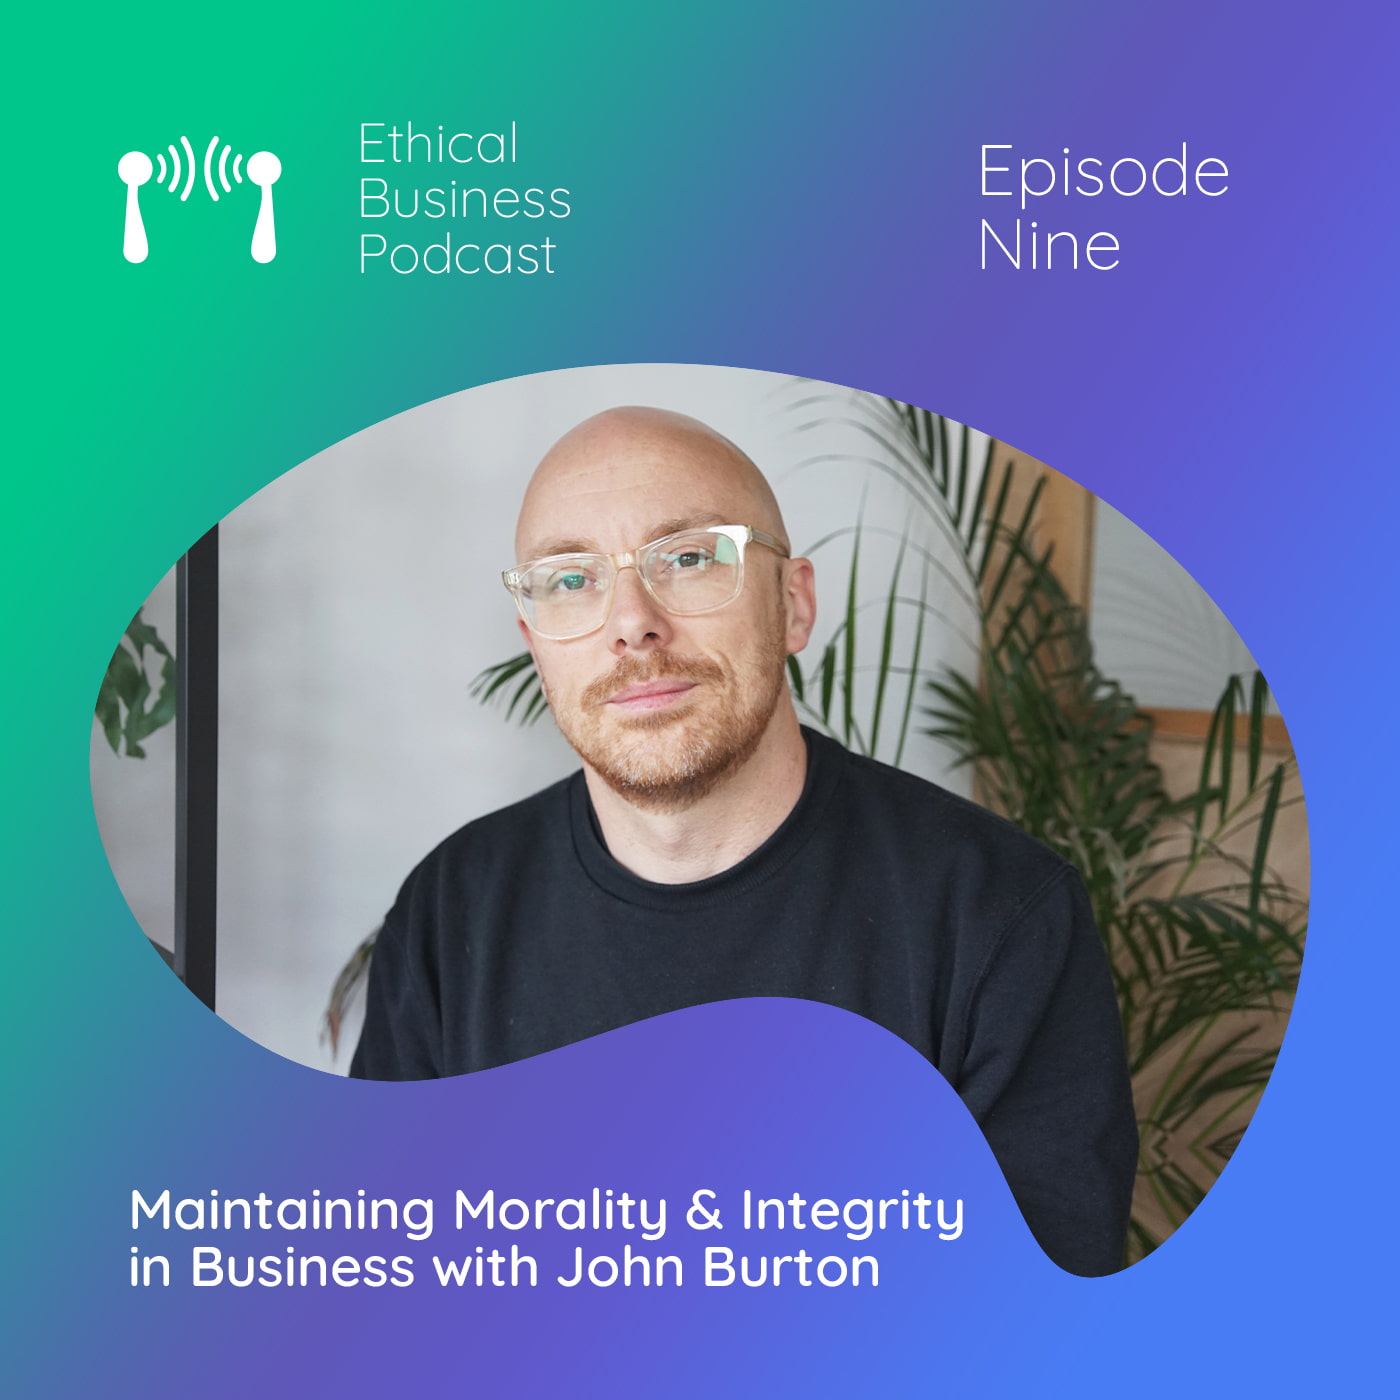 John Burton Ethical Business Podcast on Maintaining Morality & Integrity